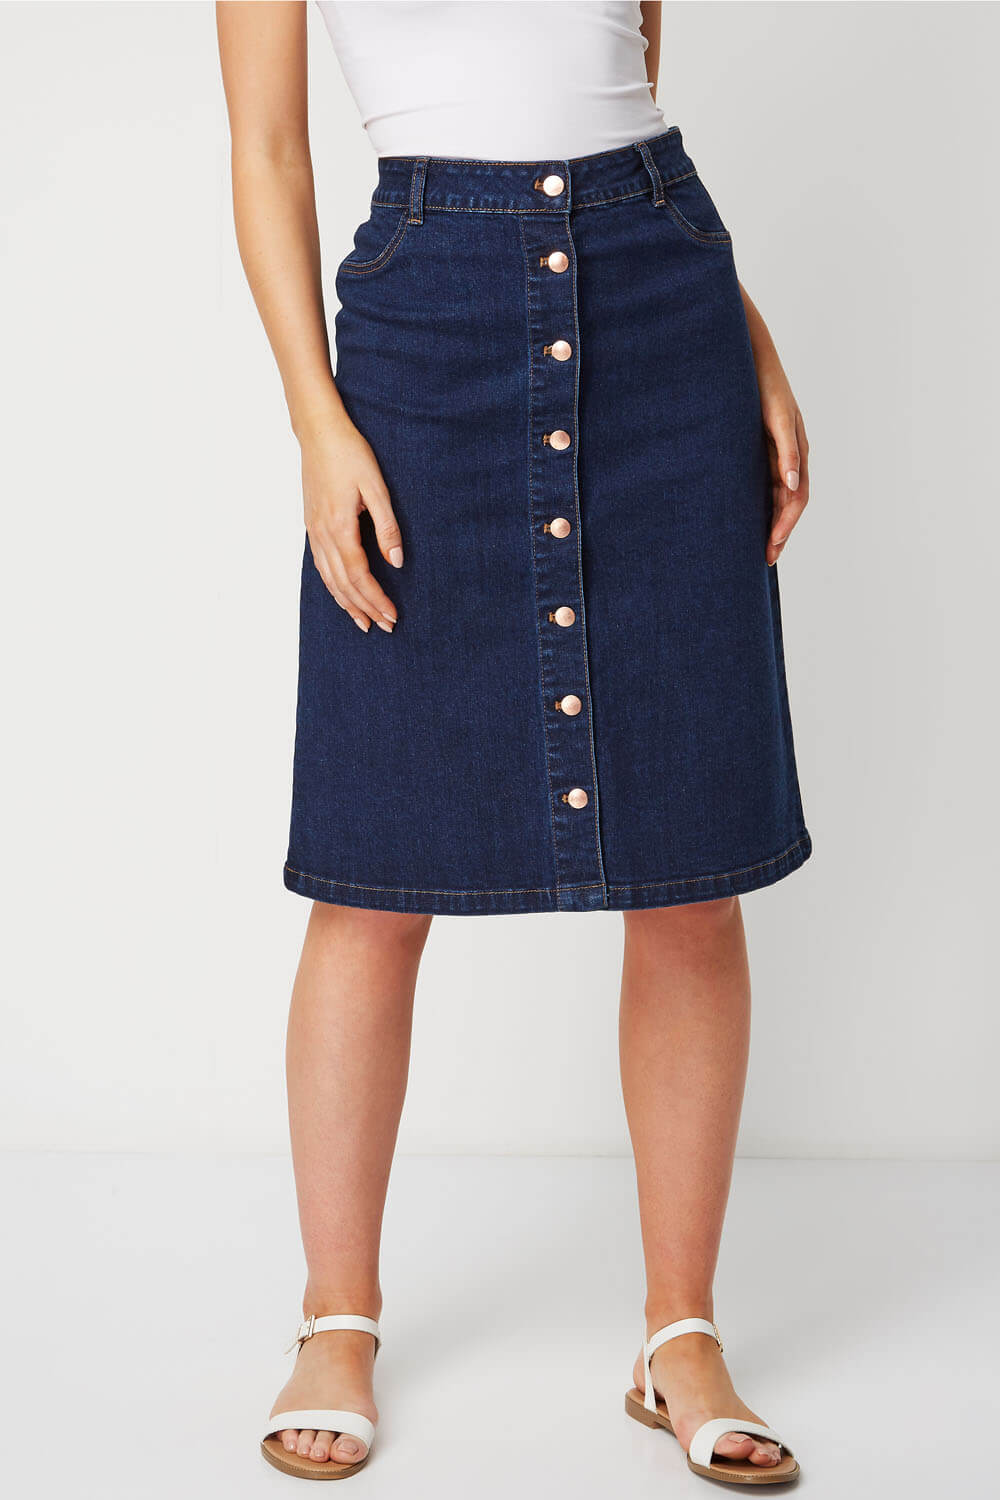 That Seventies Denim Skirt — FORAGE FASHION | Women leggings outfits,  Fashion jeans outfit, Denim skirt